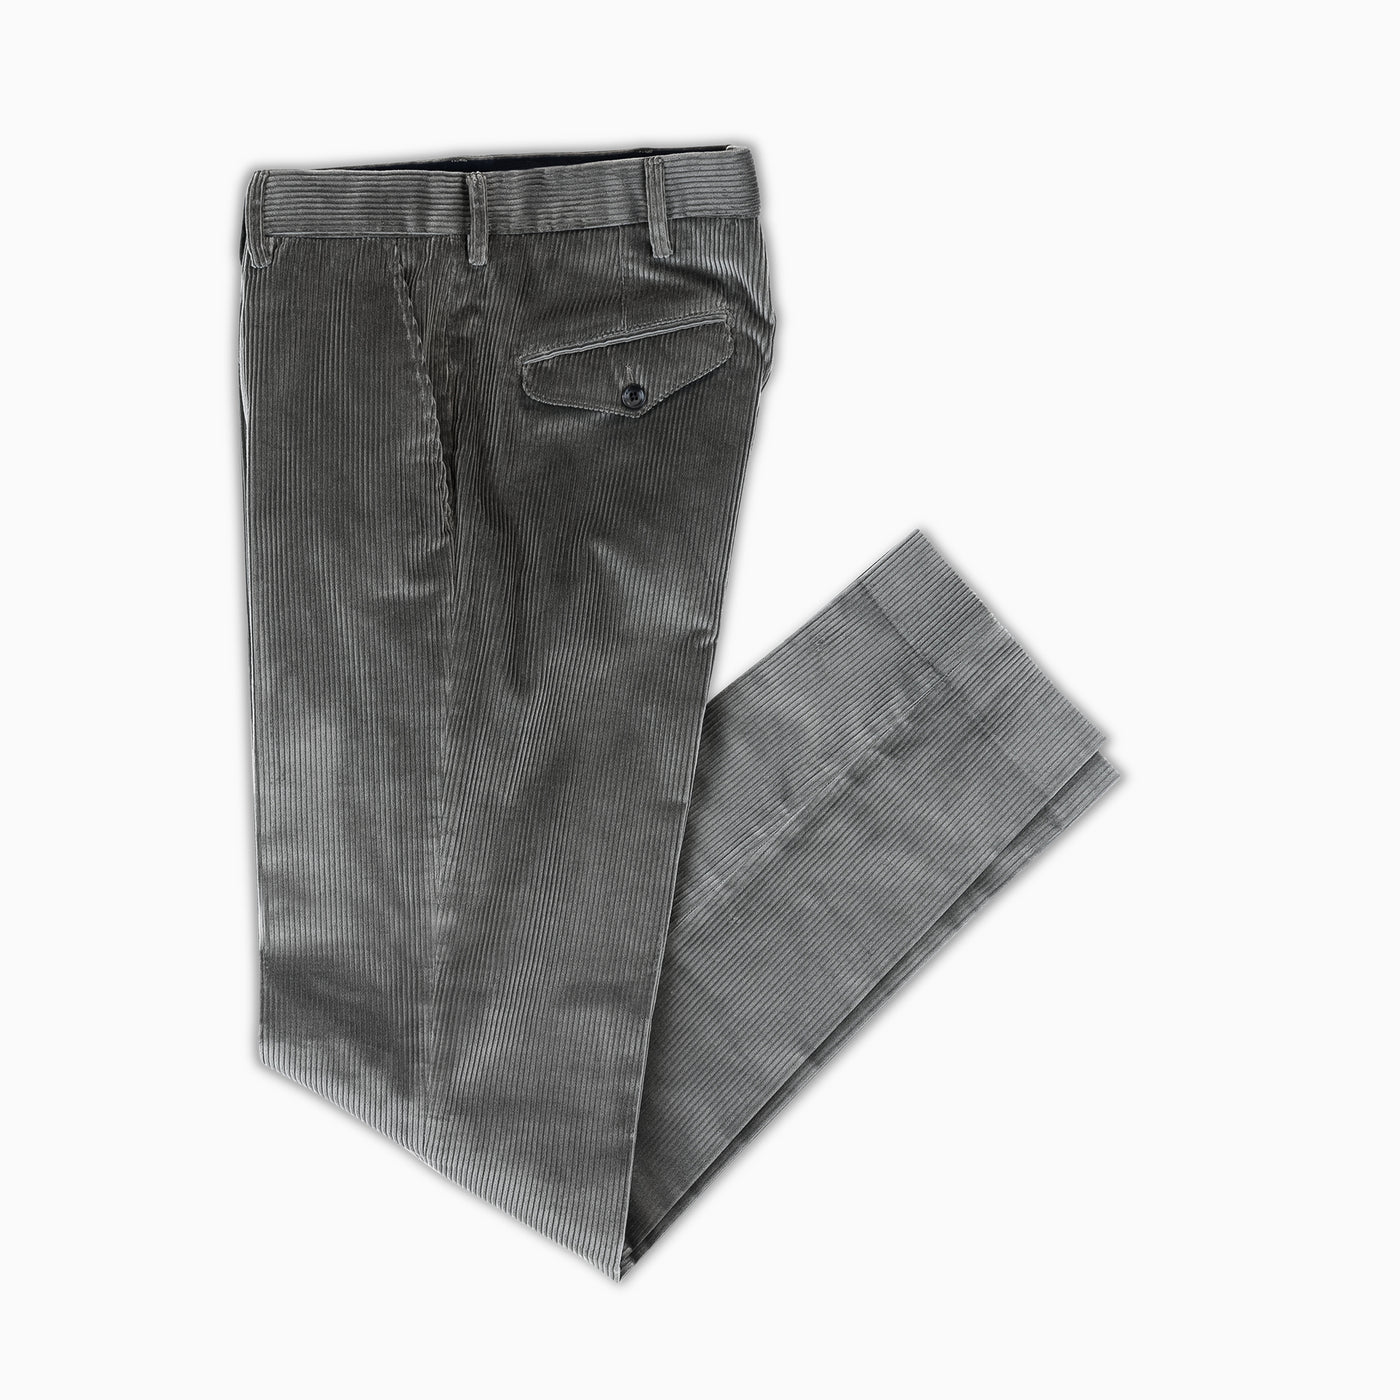 Boris Chino Pants Soft Cotton Corduroy (mud grey)